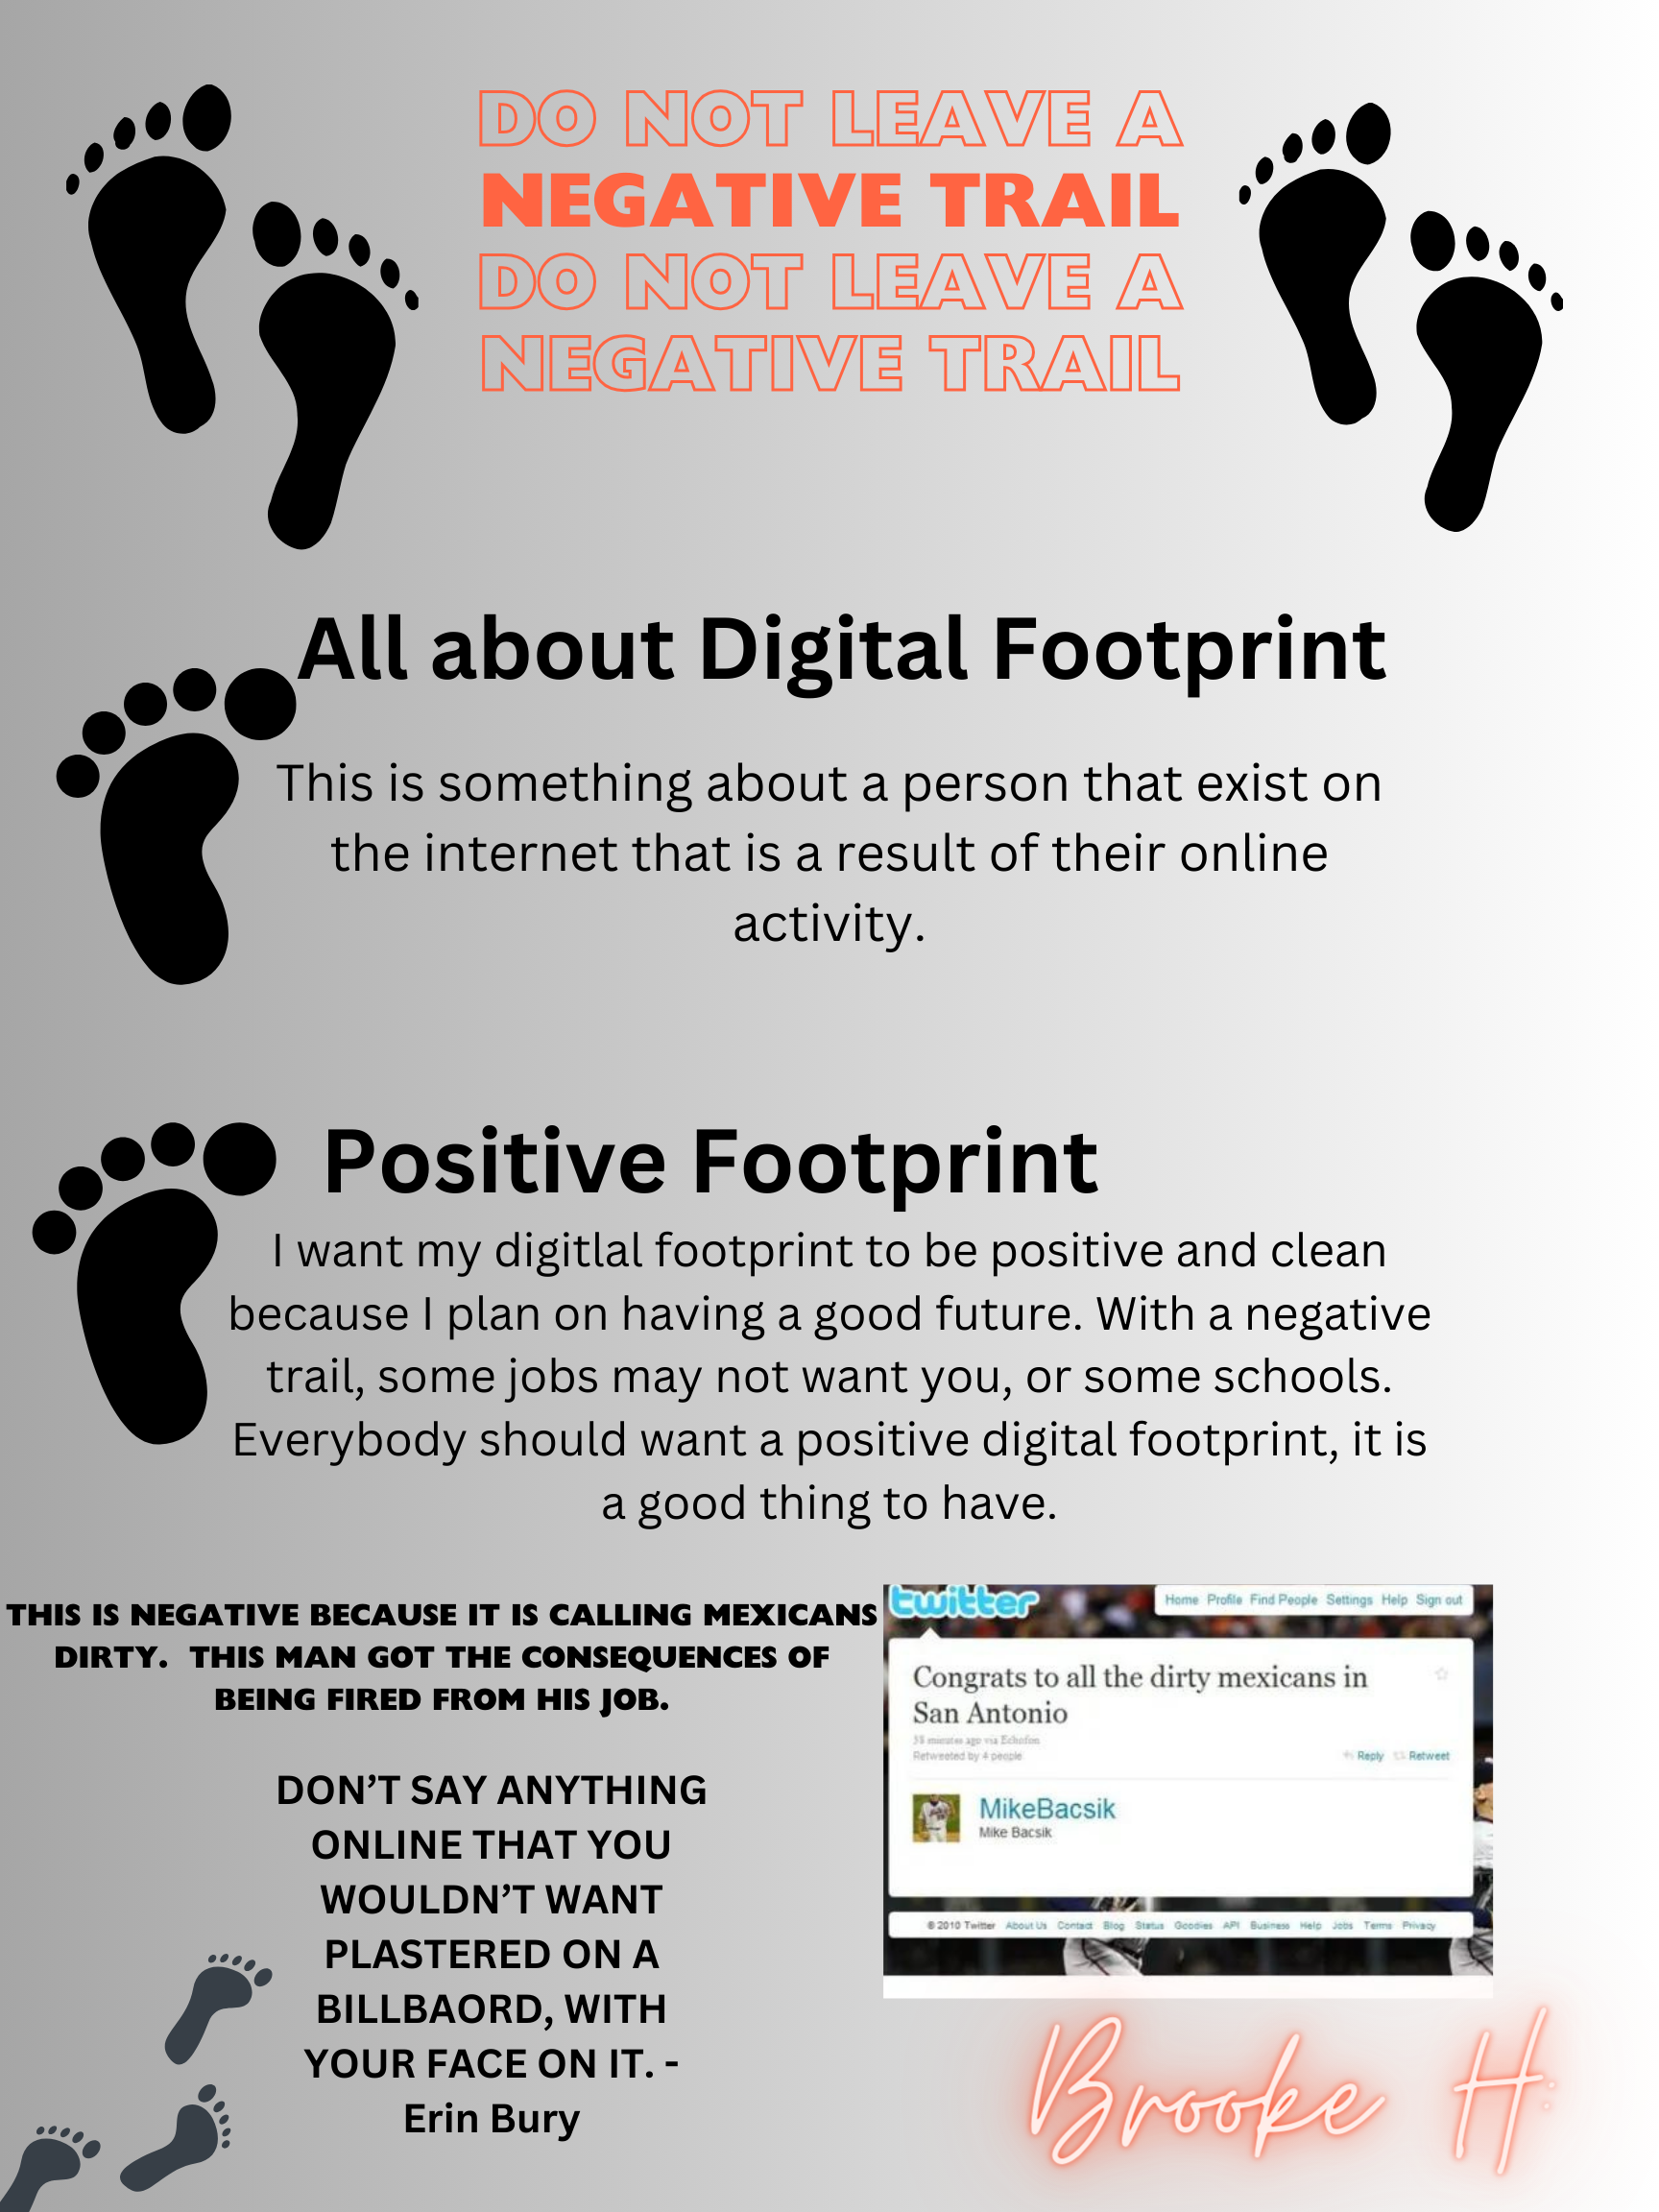 Digital Footprint Poster - Brooke H